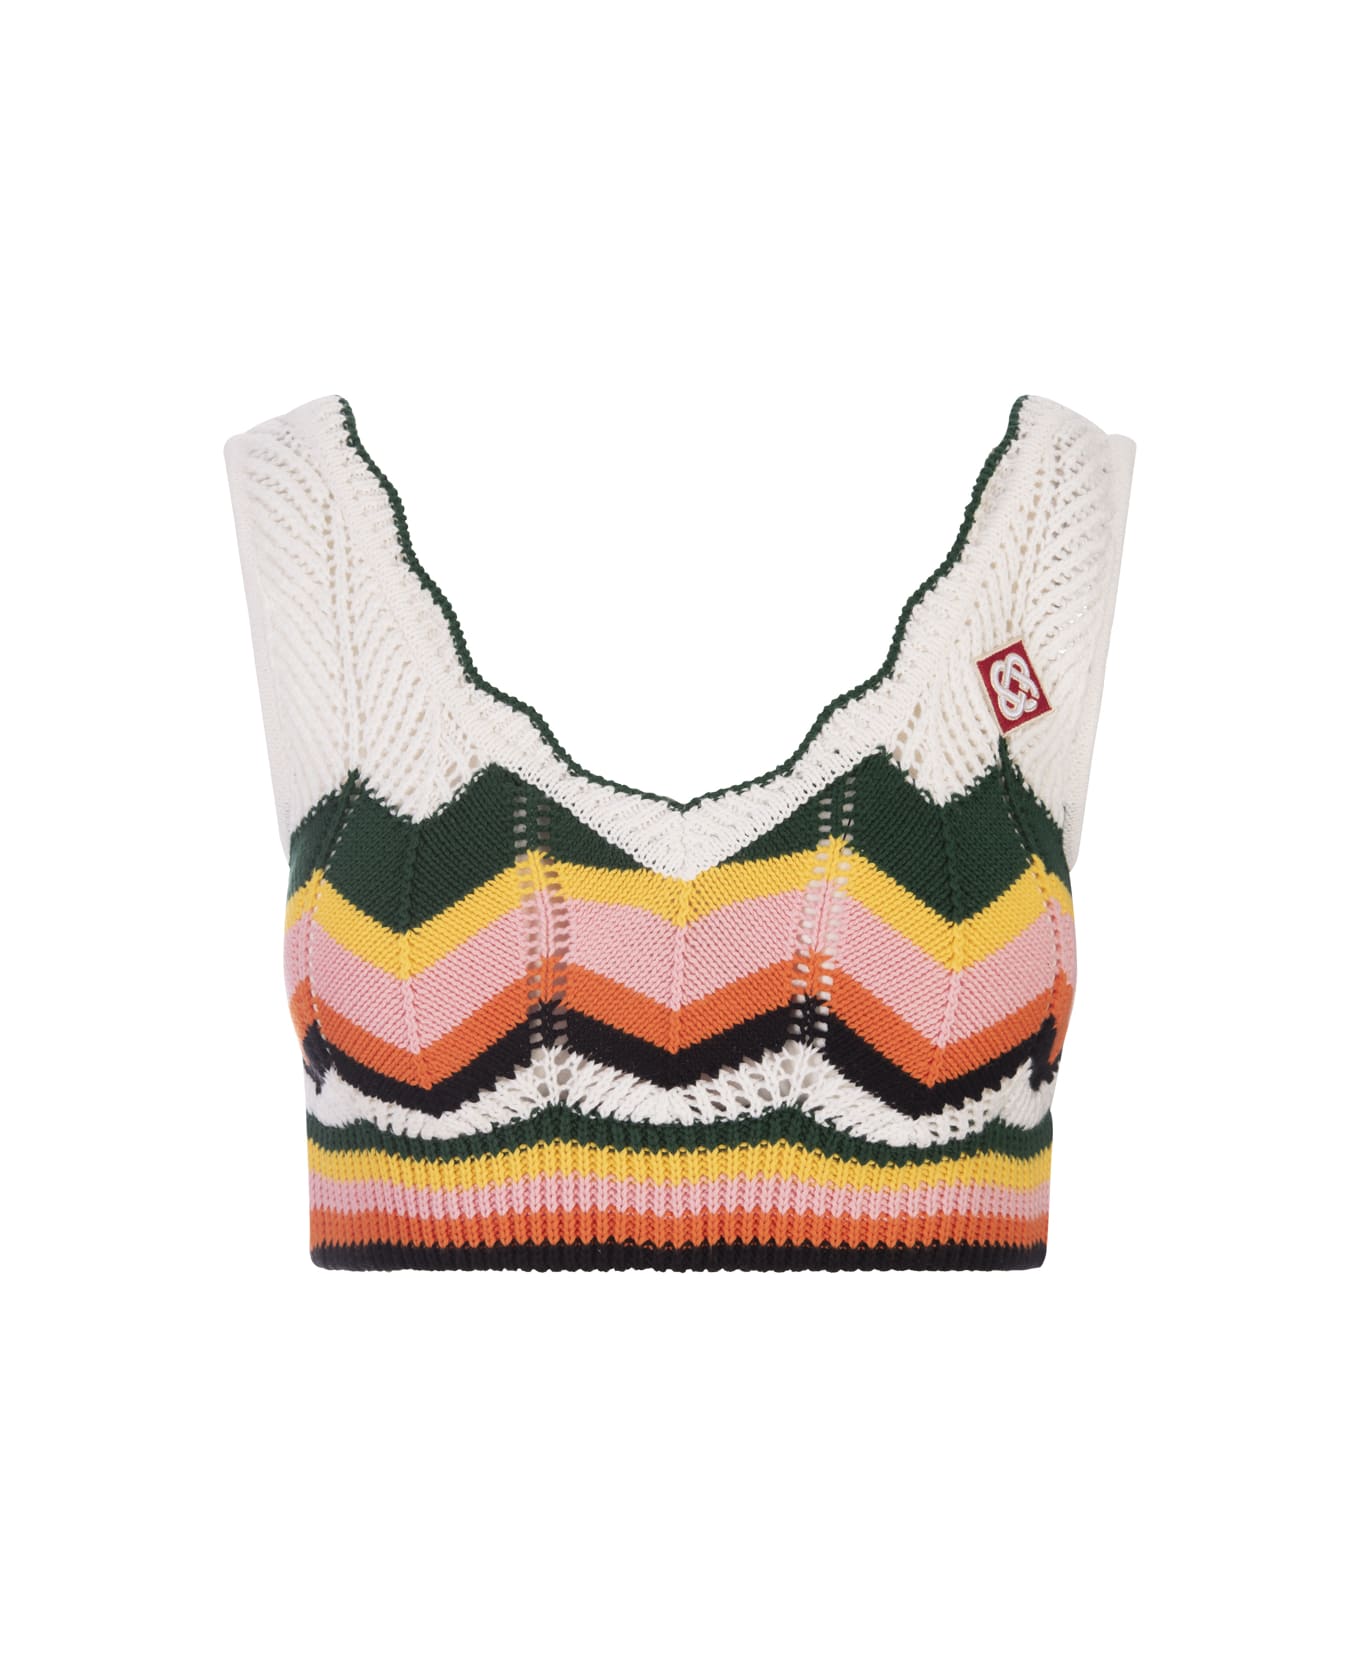 Casablanca Chevron Knitted Crop Top - Multicolour